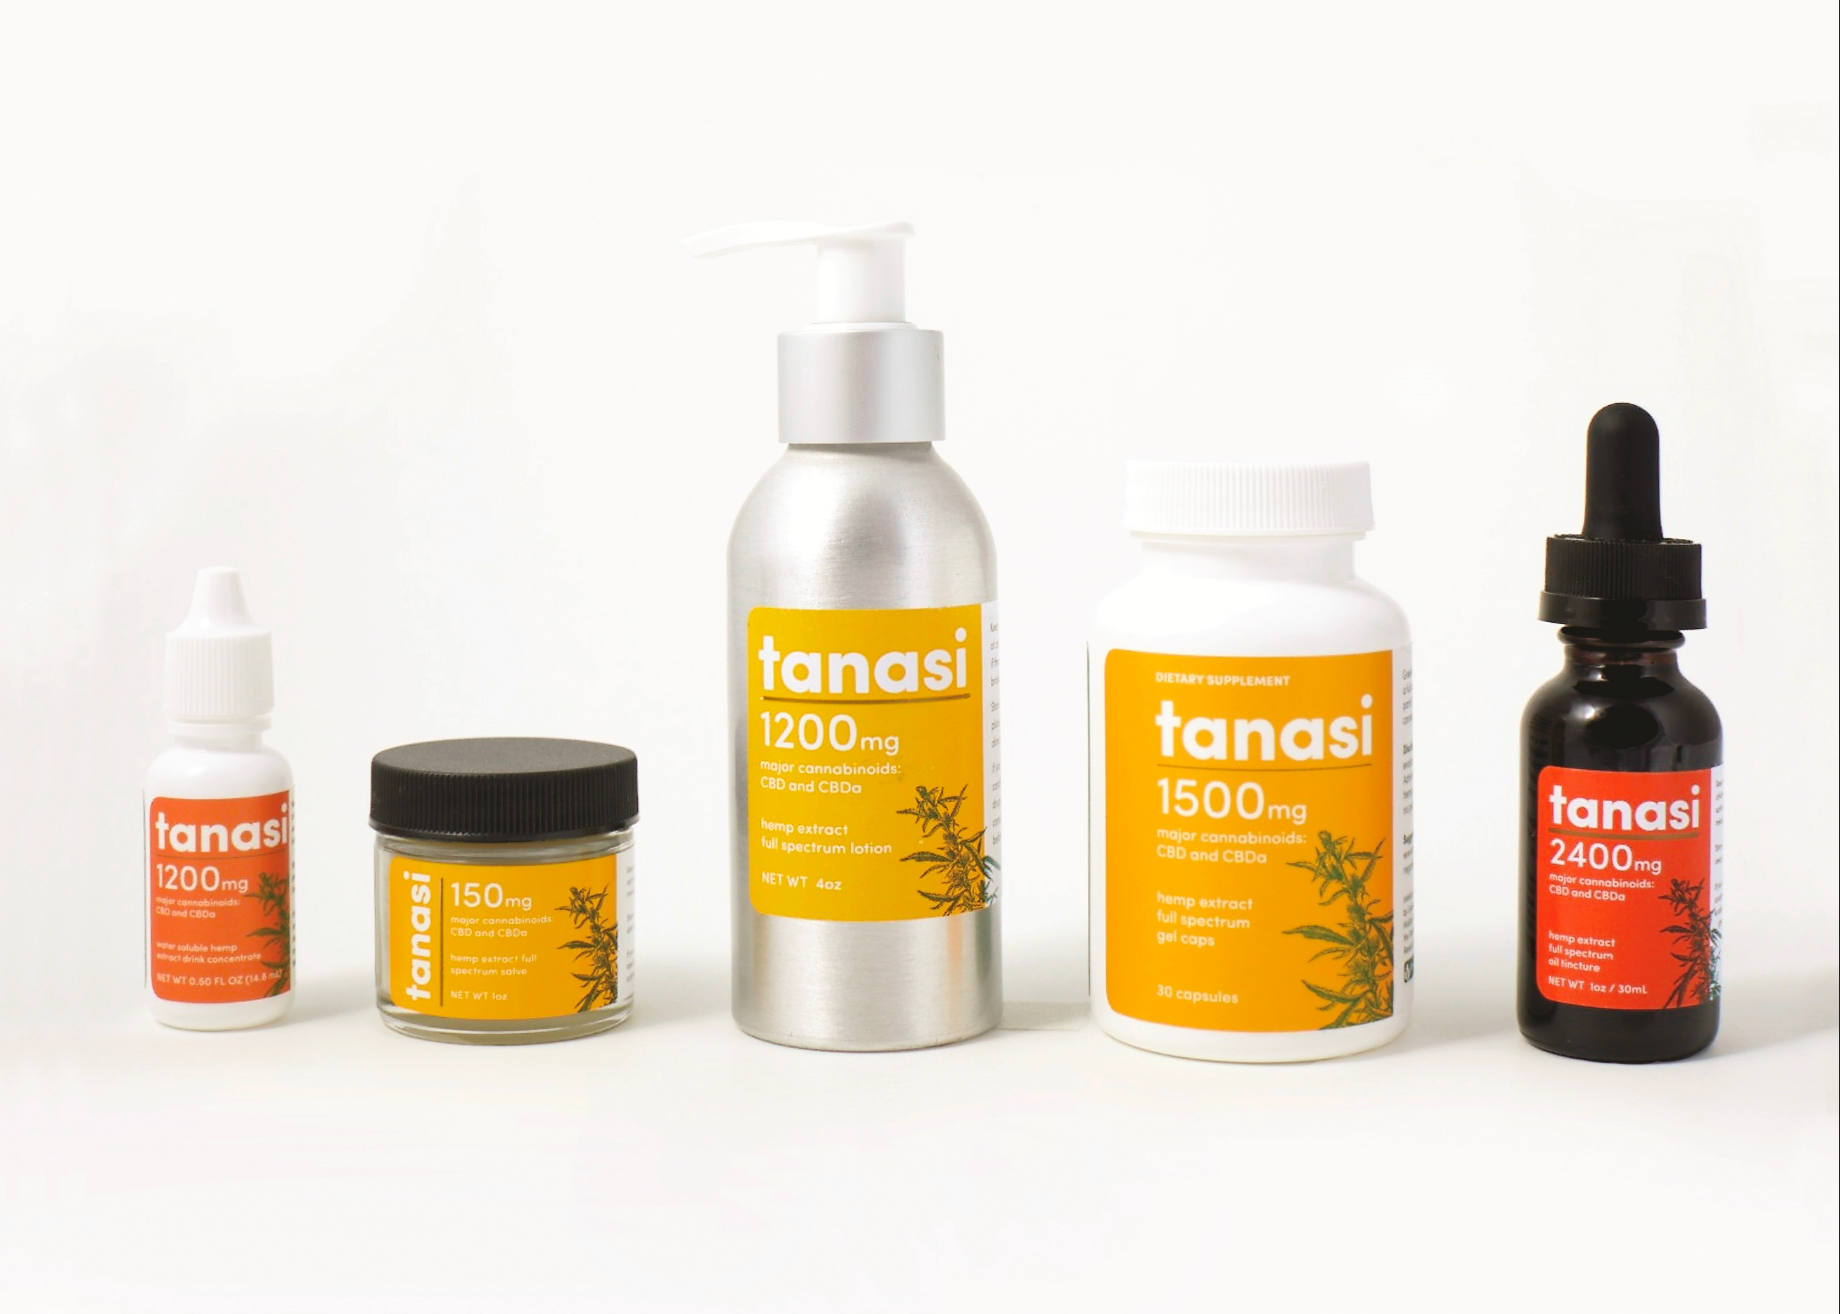 Tanasi Launches University-Developed, Full-Spectrum Cannabinoid Product Line